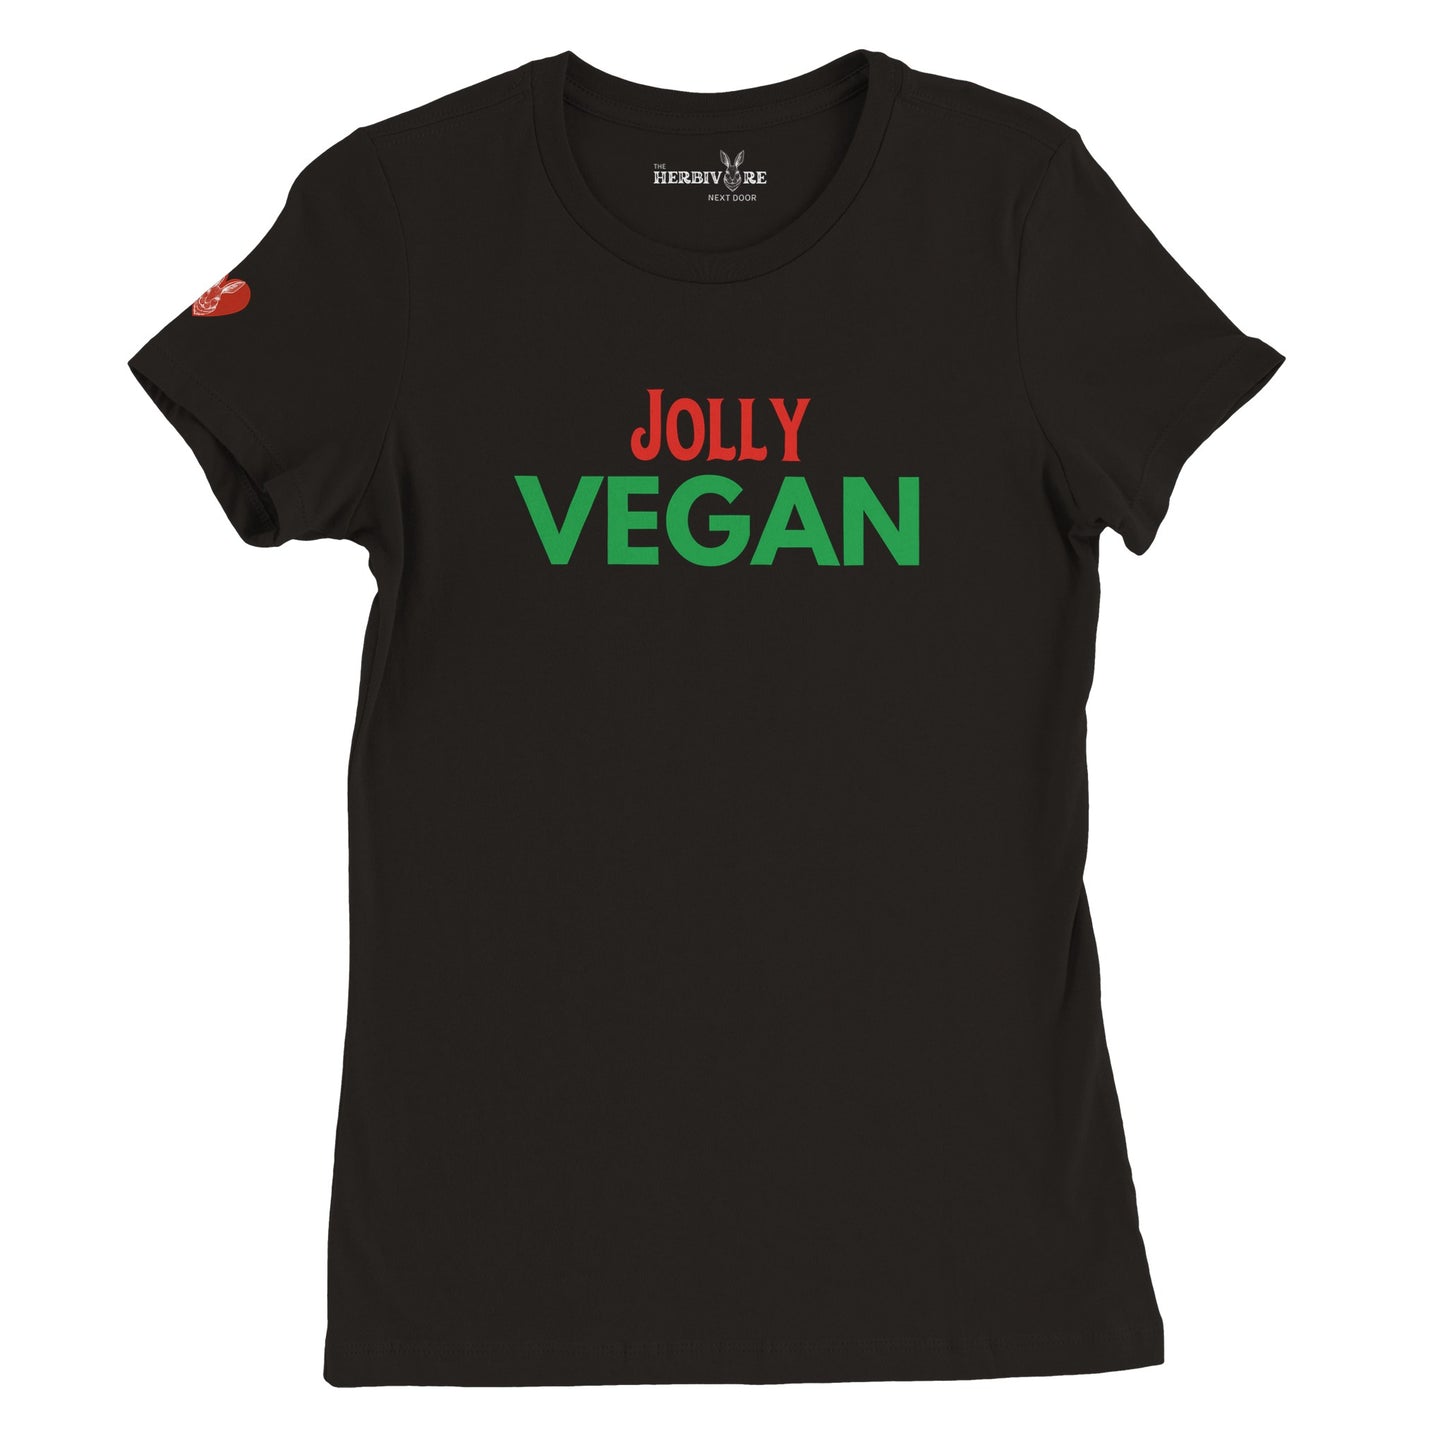 Jolly Vegan - Women's Style